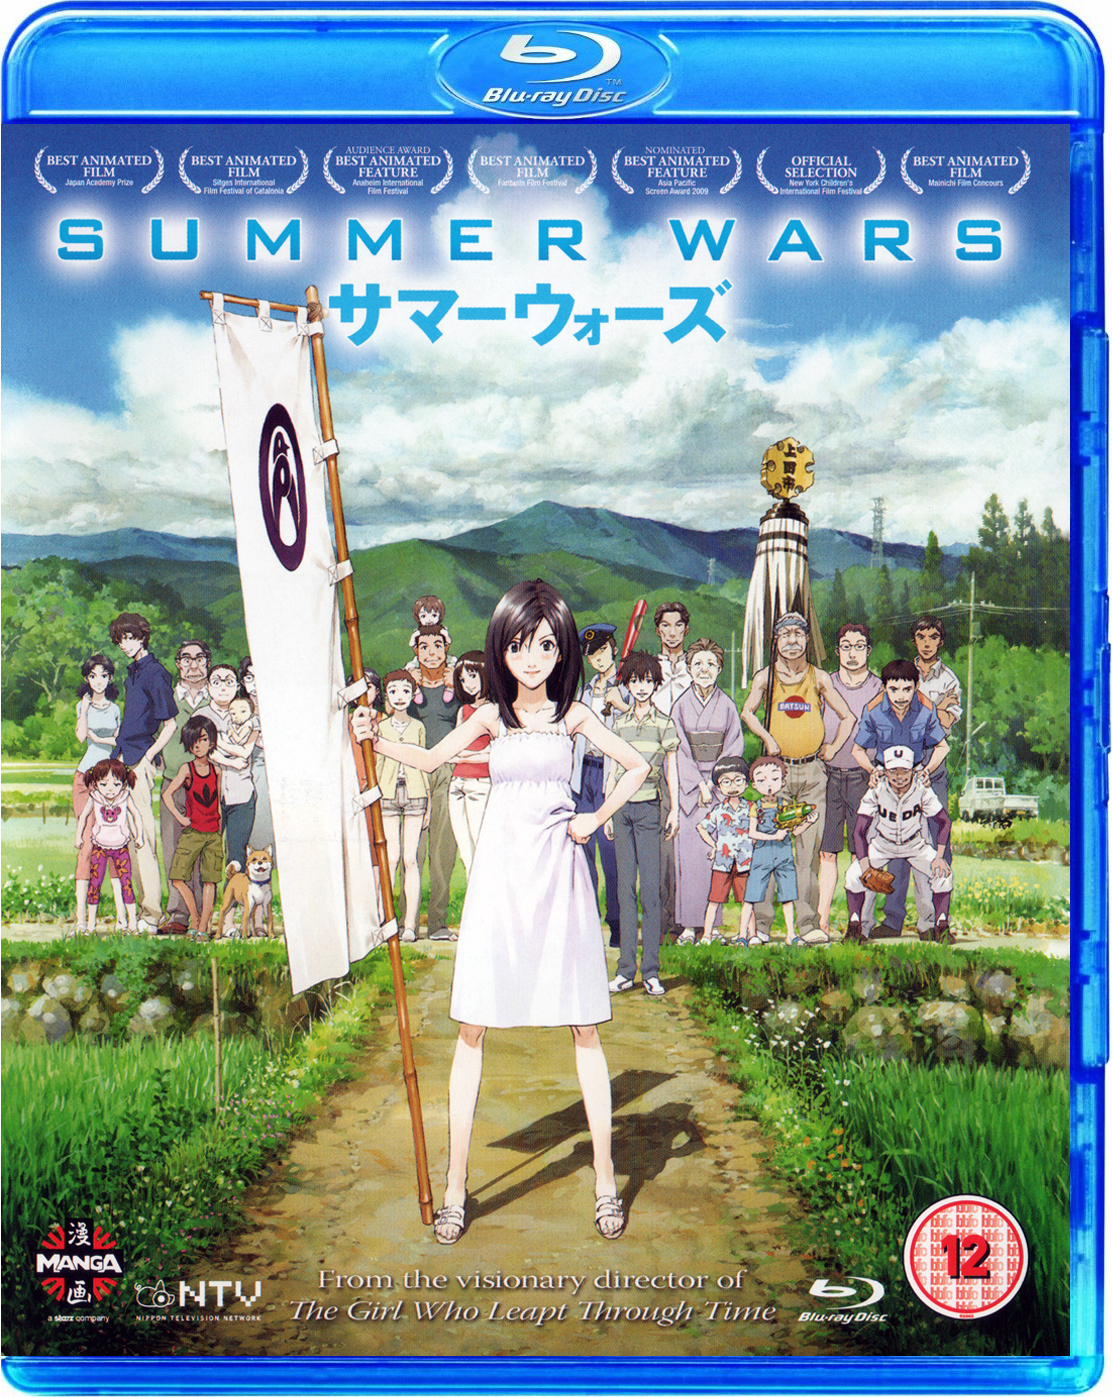 wars - Summer Wars (2009) Samâ uôzu (2019) [AC3 52.0 + SUP] [Blu Ray-Rip] [GOOGLEDRIVE*] 17660_front